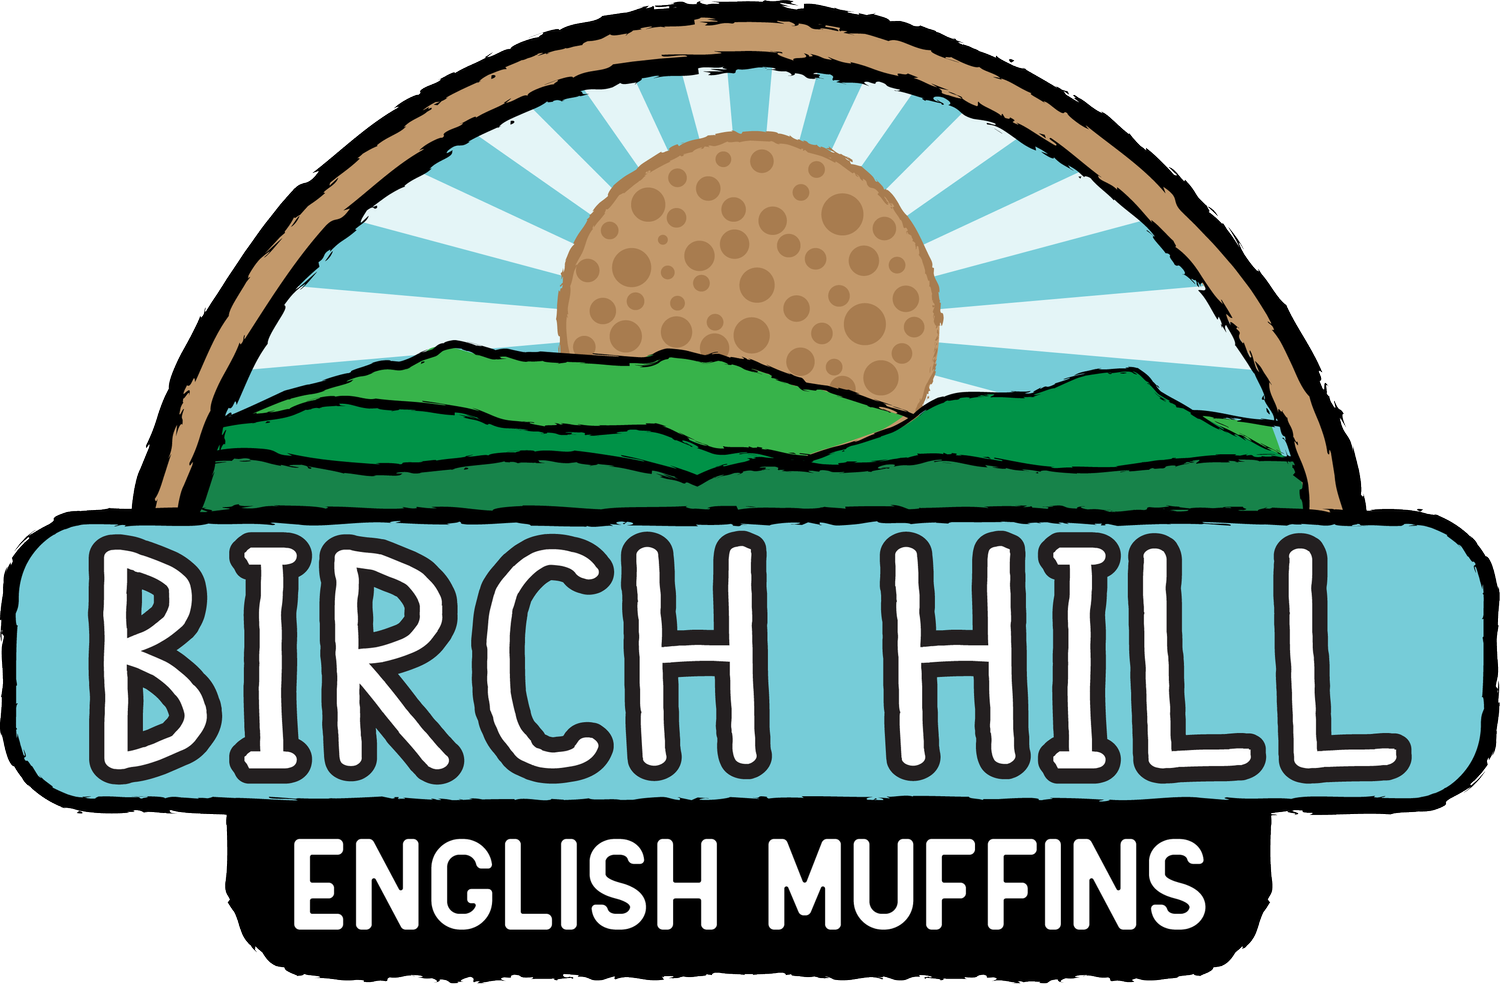 Birch Hill English Muffins